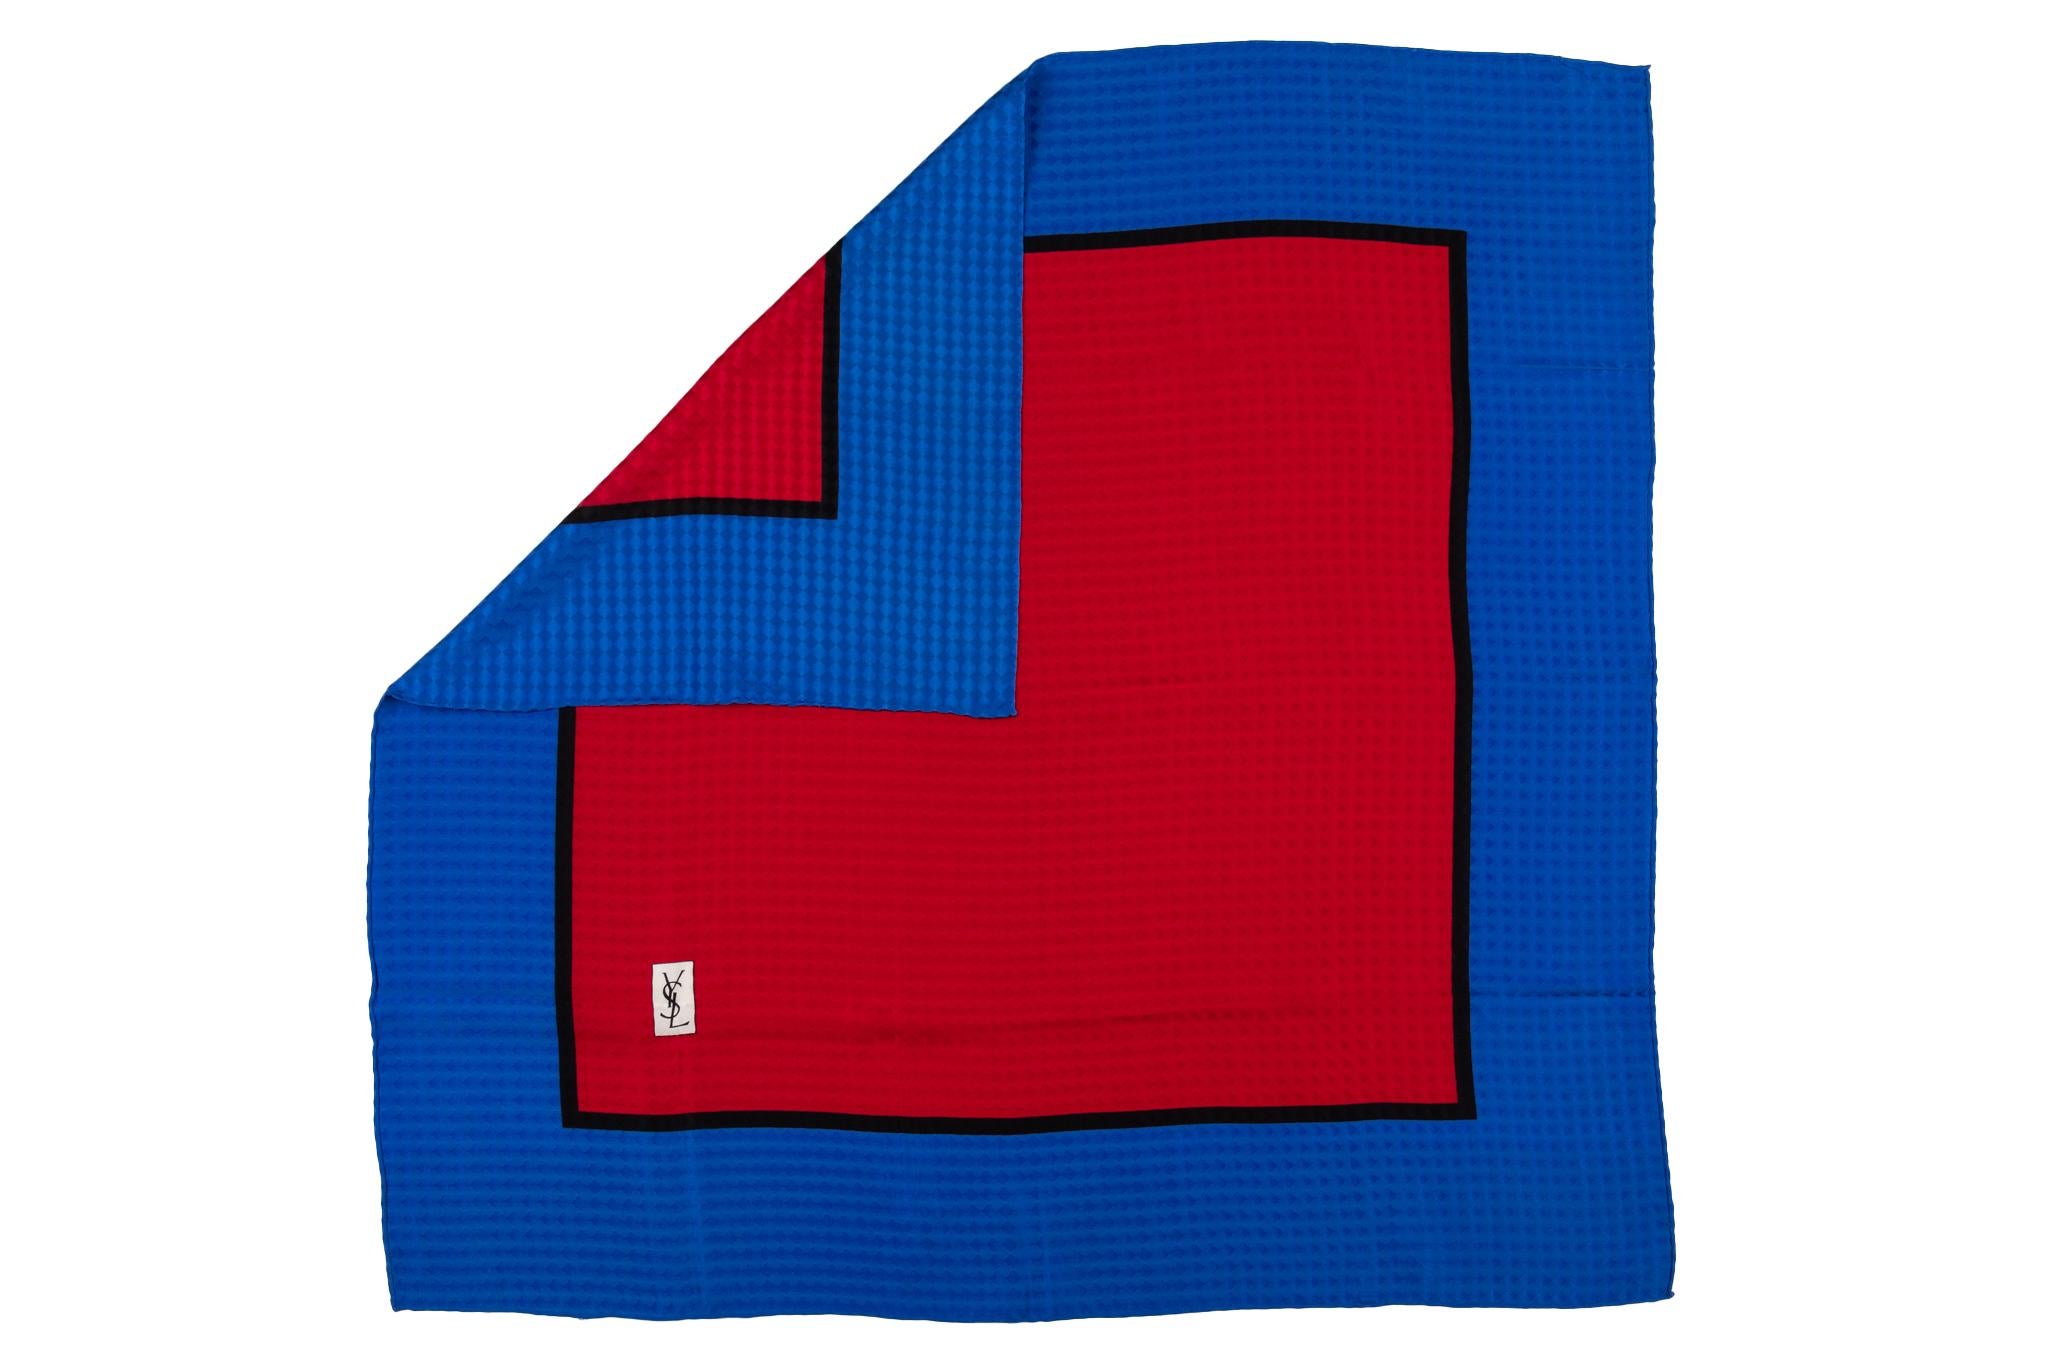 YSL vintage color block textured silk scarf. Red and electric blue color combination.
No box. No label.